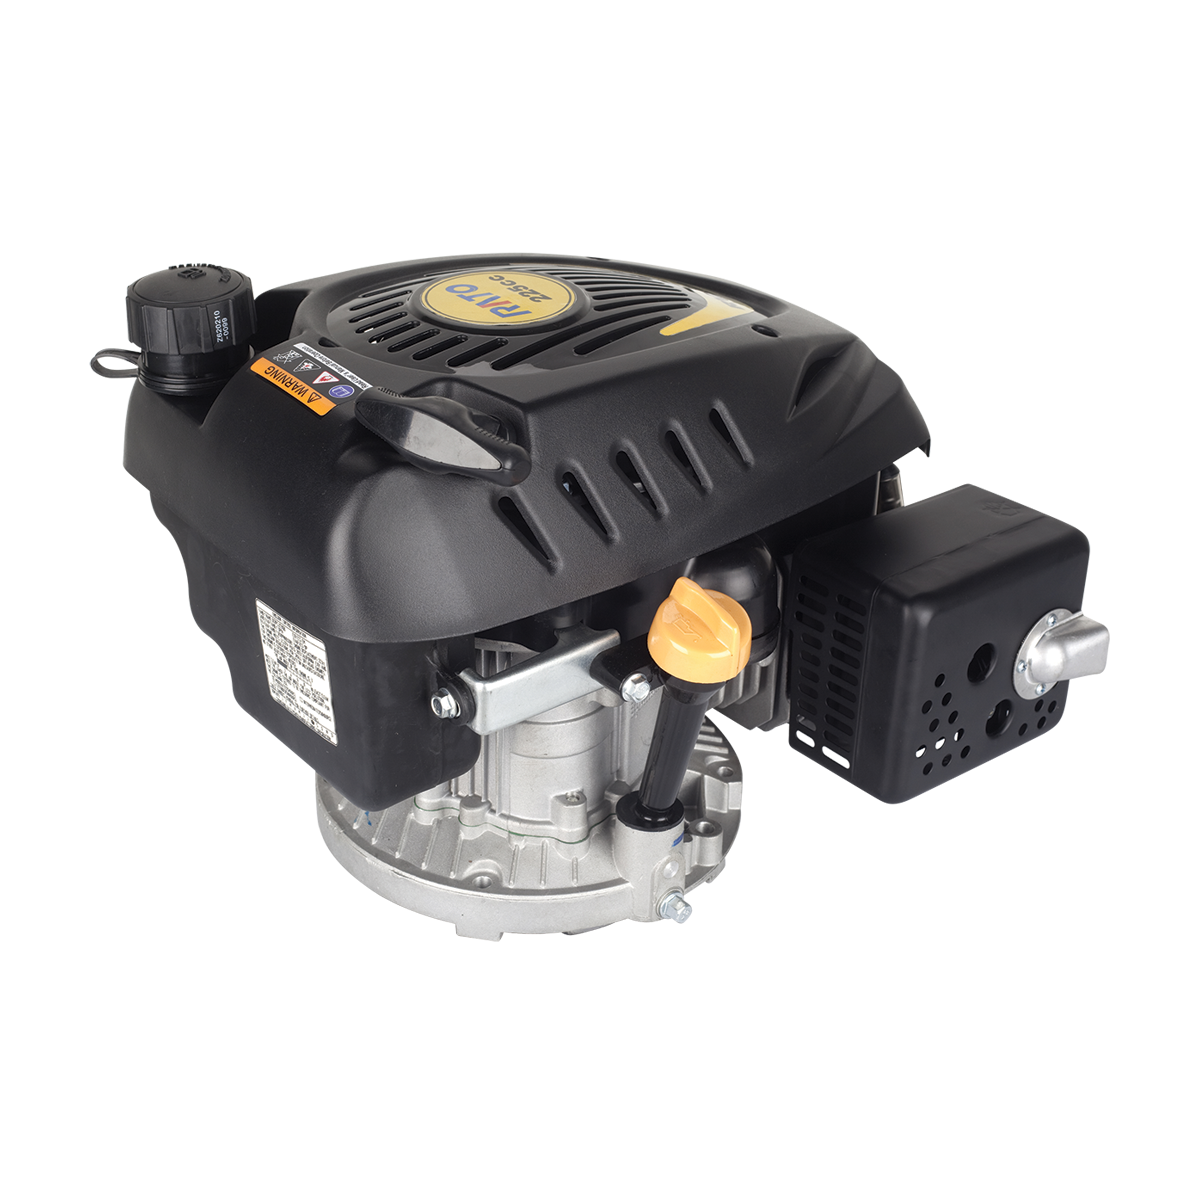 RATO 225cc Engine – 22mm Vertical Shaft